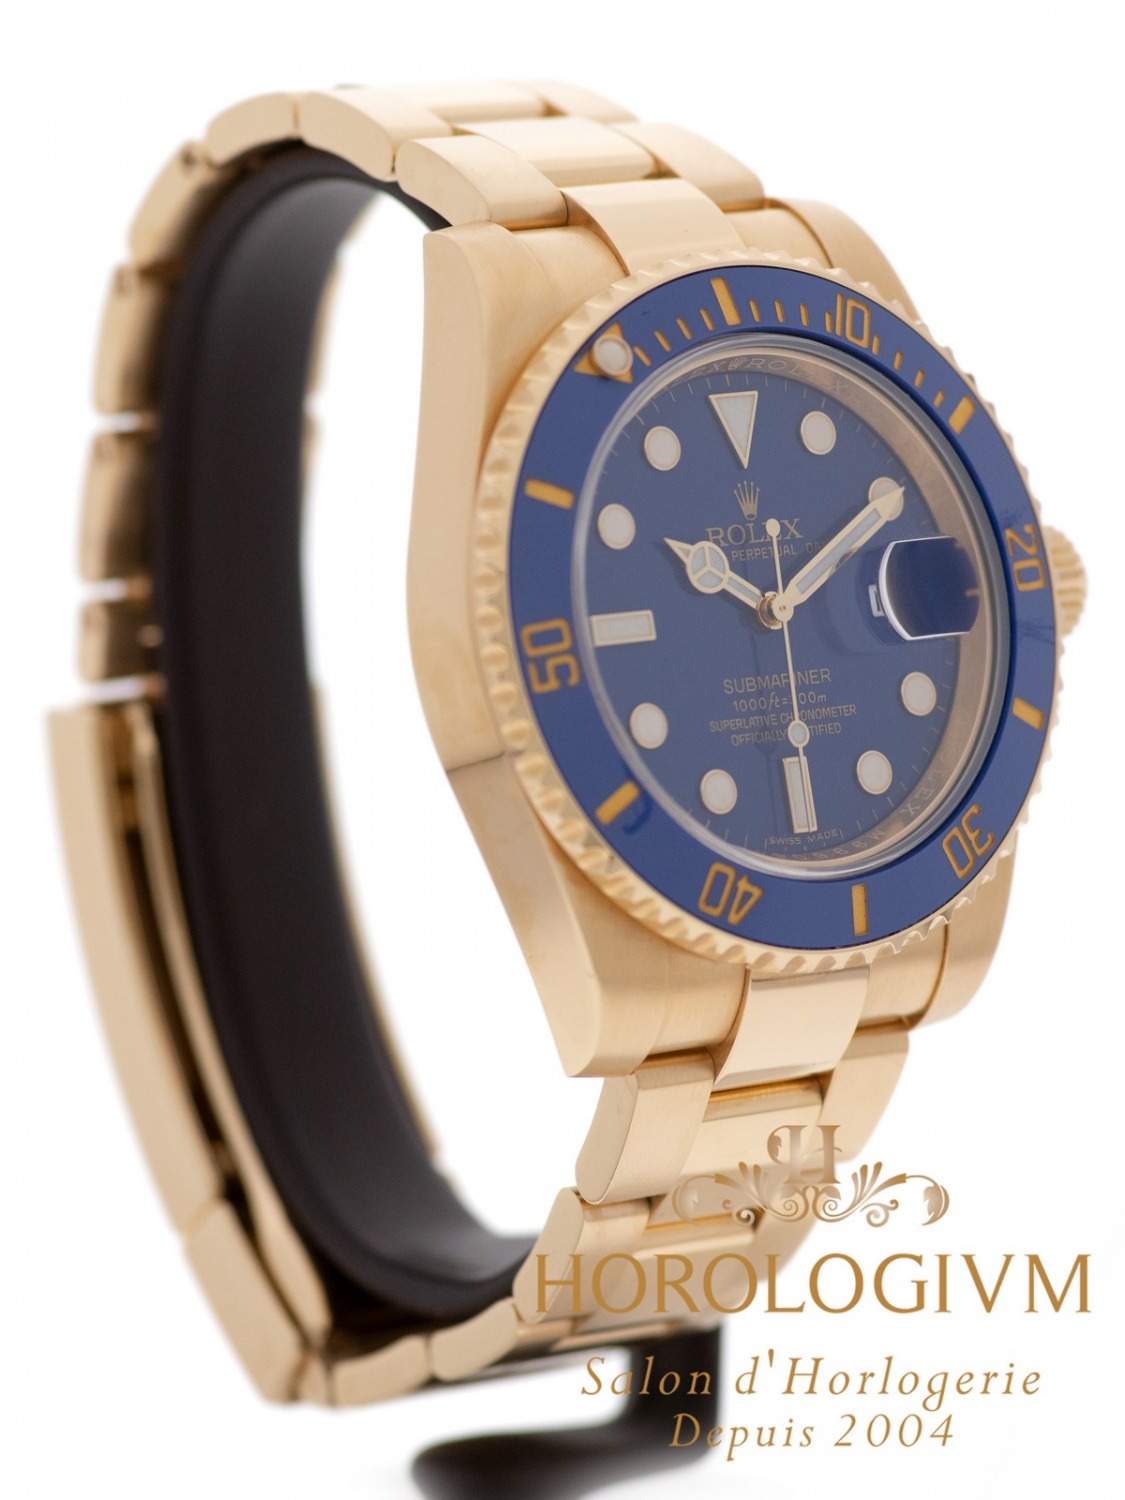 Rolex Submariner 40MM Ref. 116618 LB YG watch, yellow gold